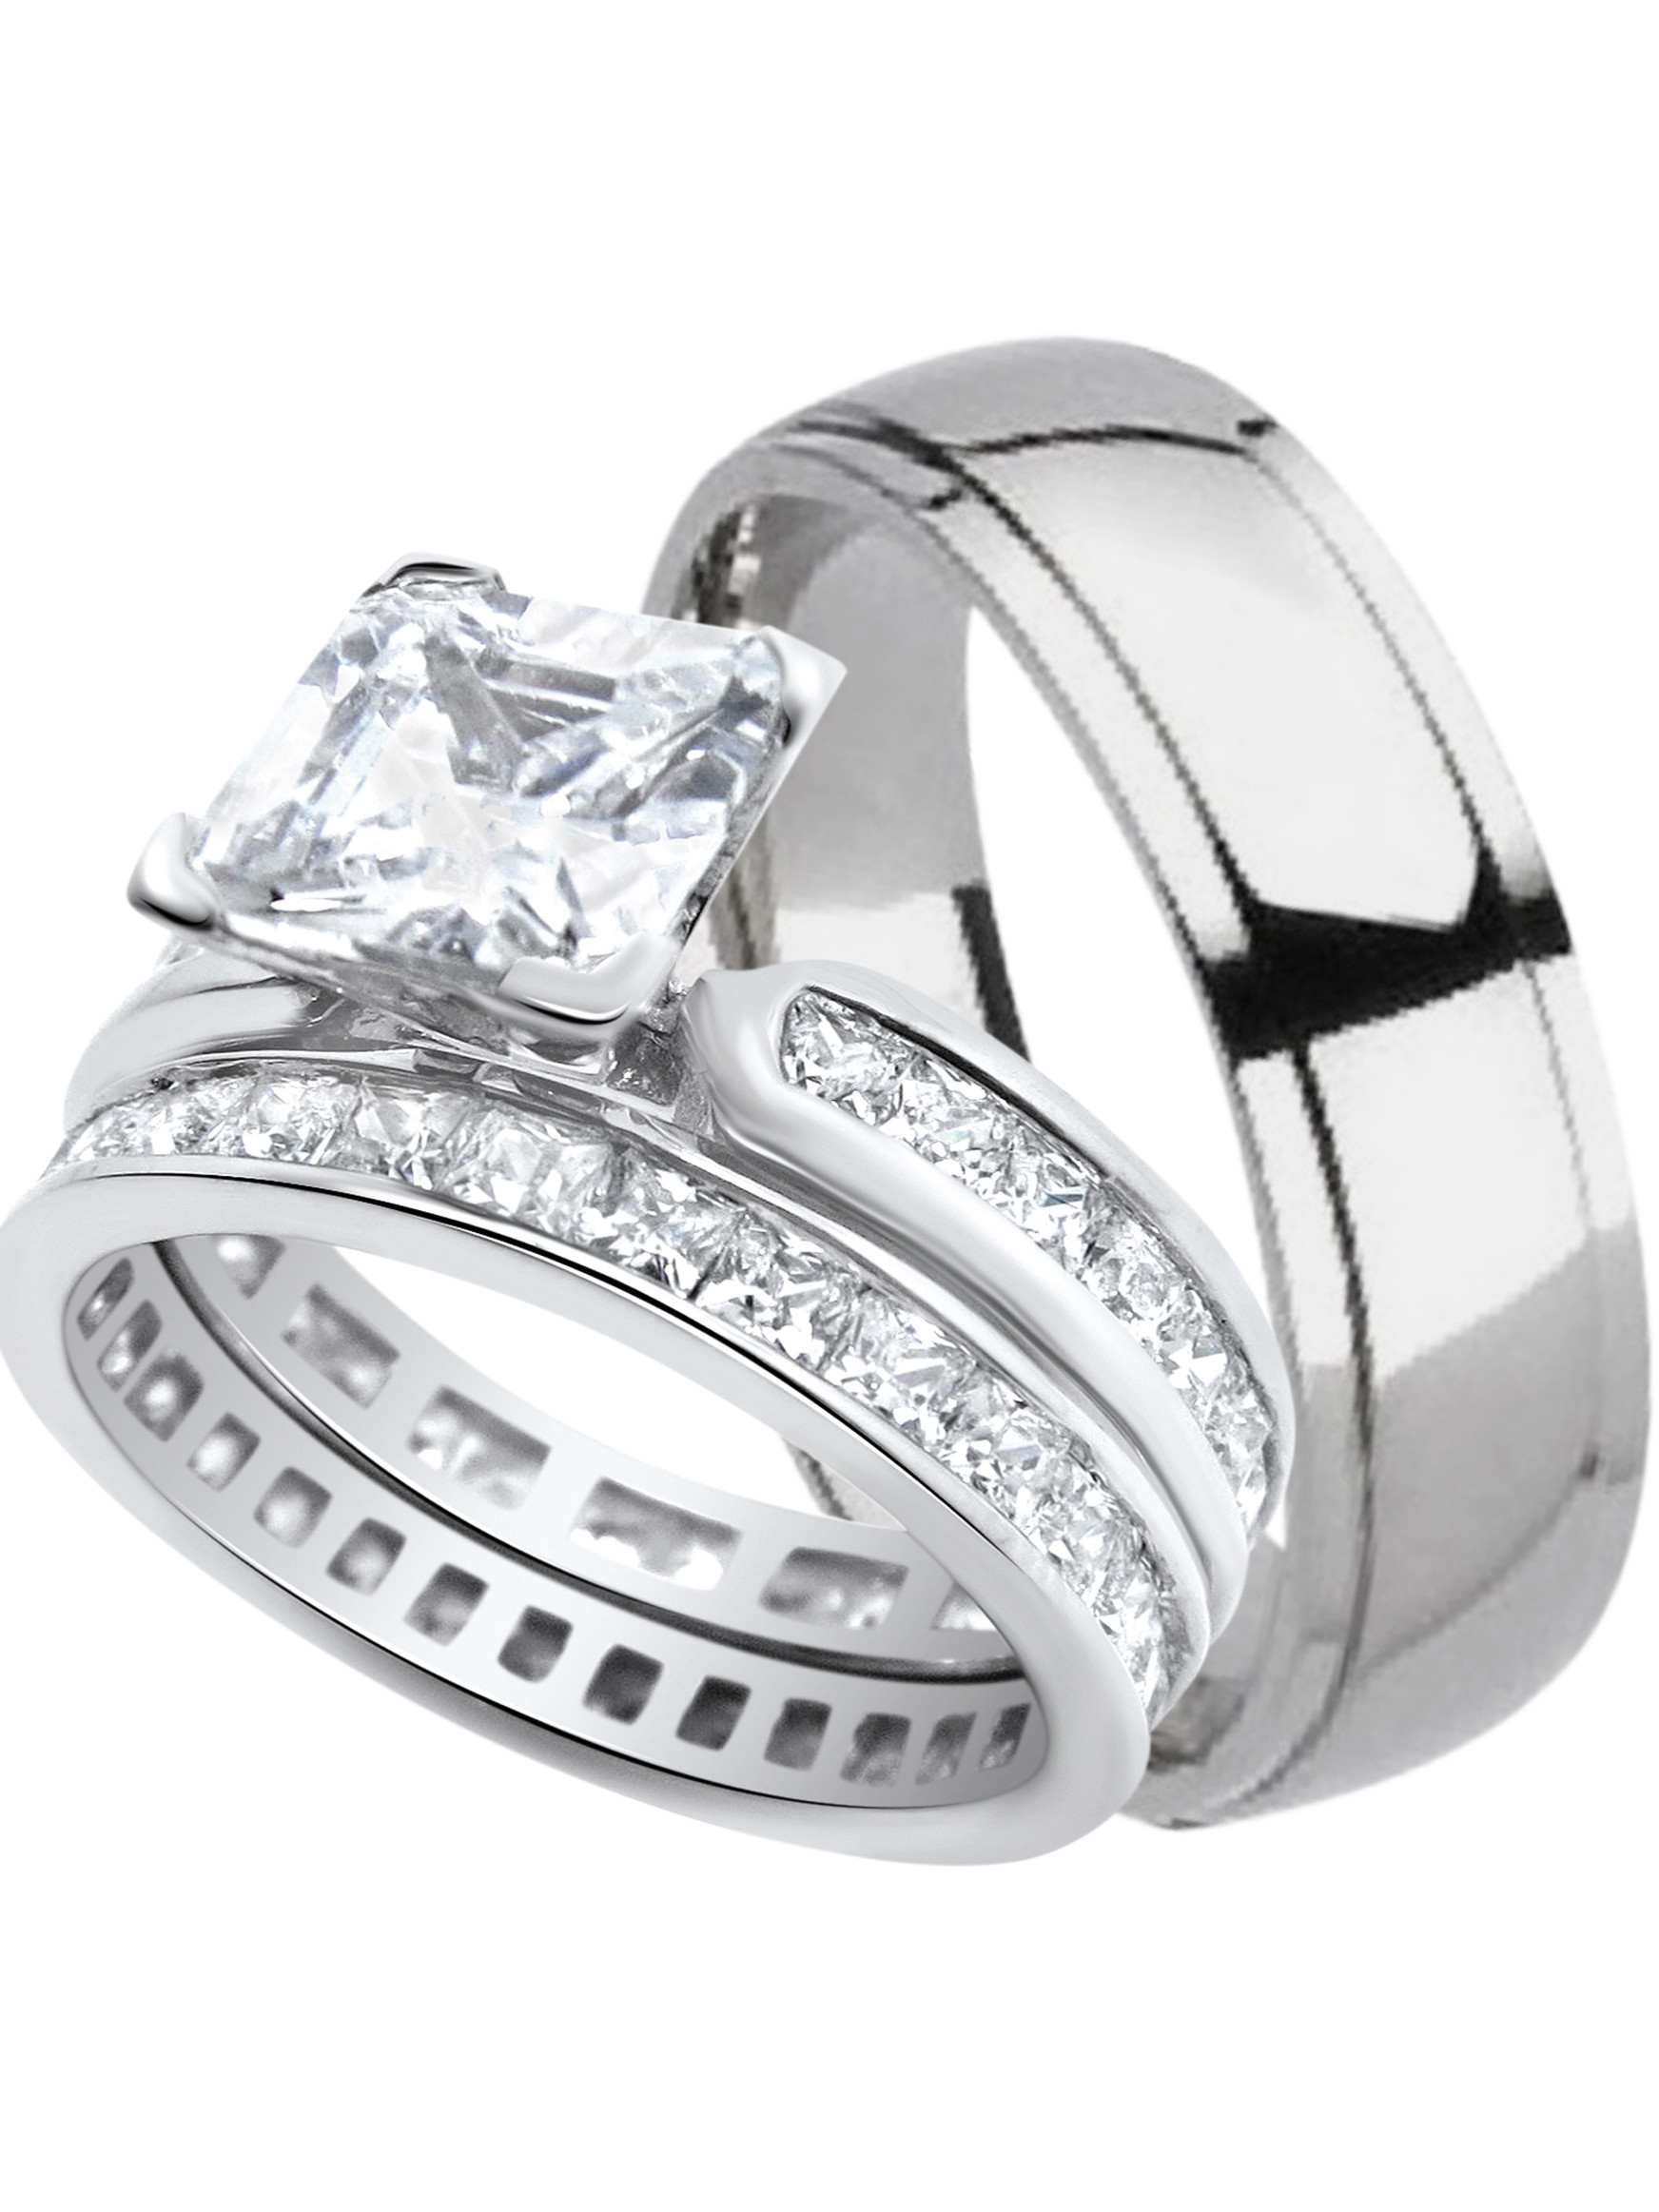 Walmart Wedding Ring Sets
 LaRaso & Co His and Hers Wedding Ring Sets Matching